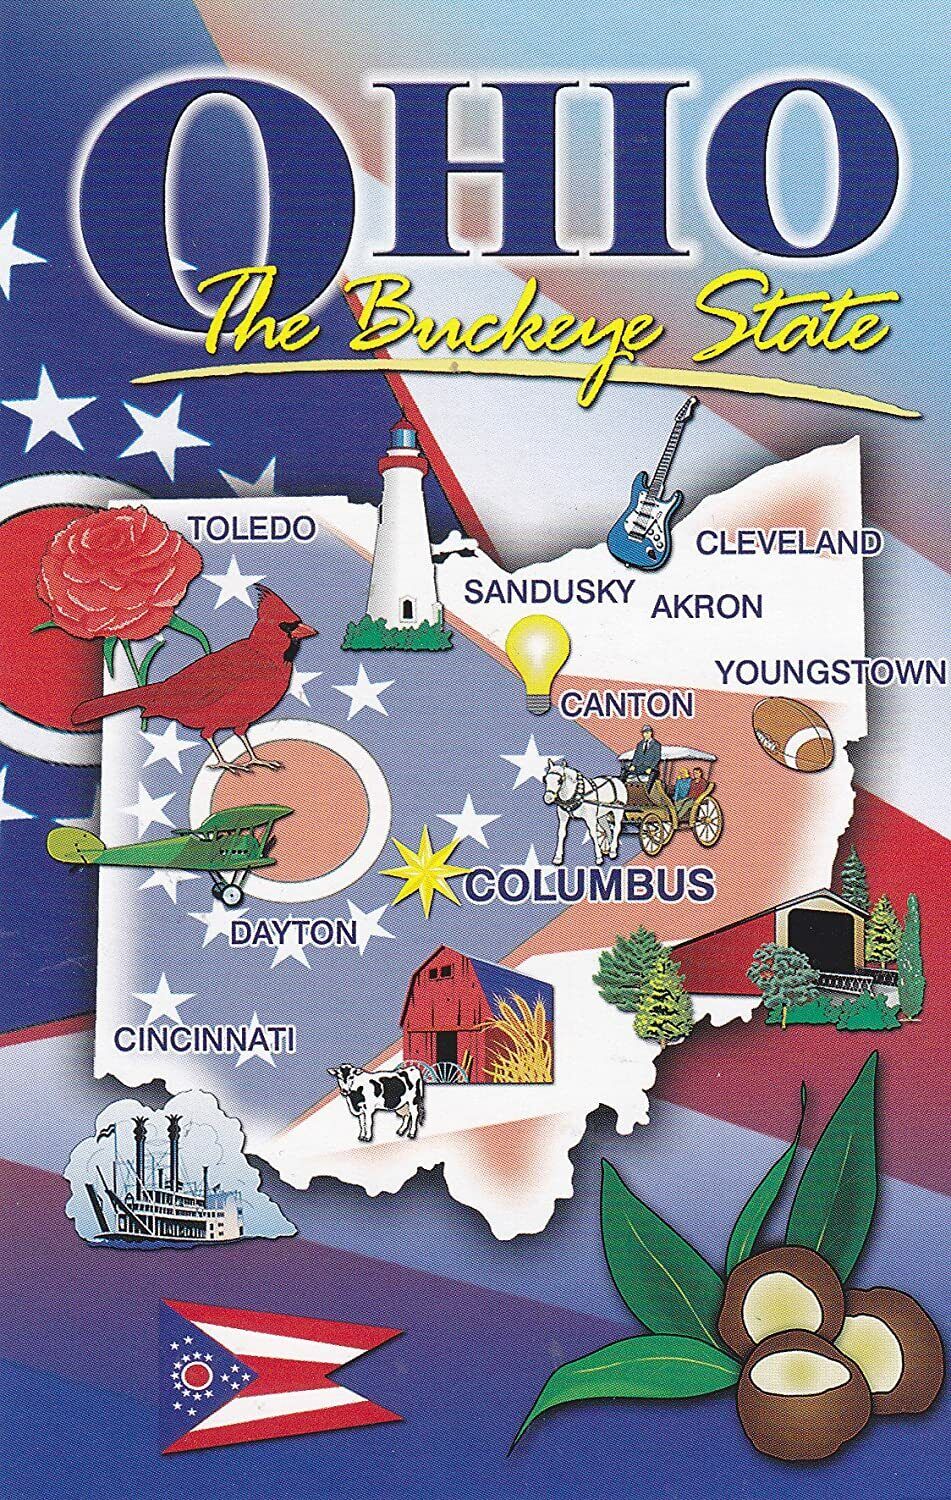 1  STATES1OHIO OHIO, The Buckeye State, Capitol: COLUMBUS; Statehood: March 1, 1